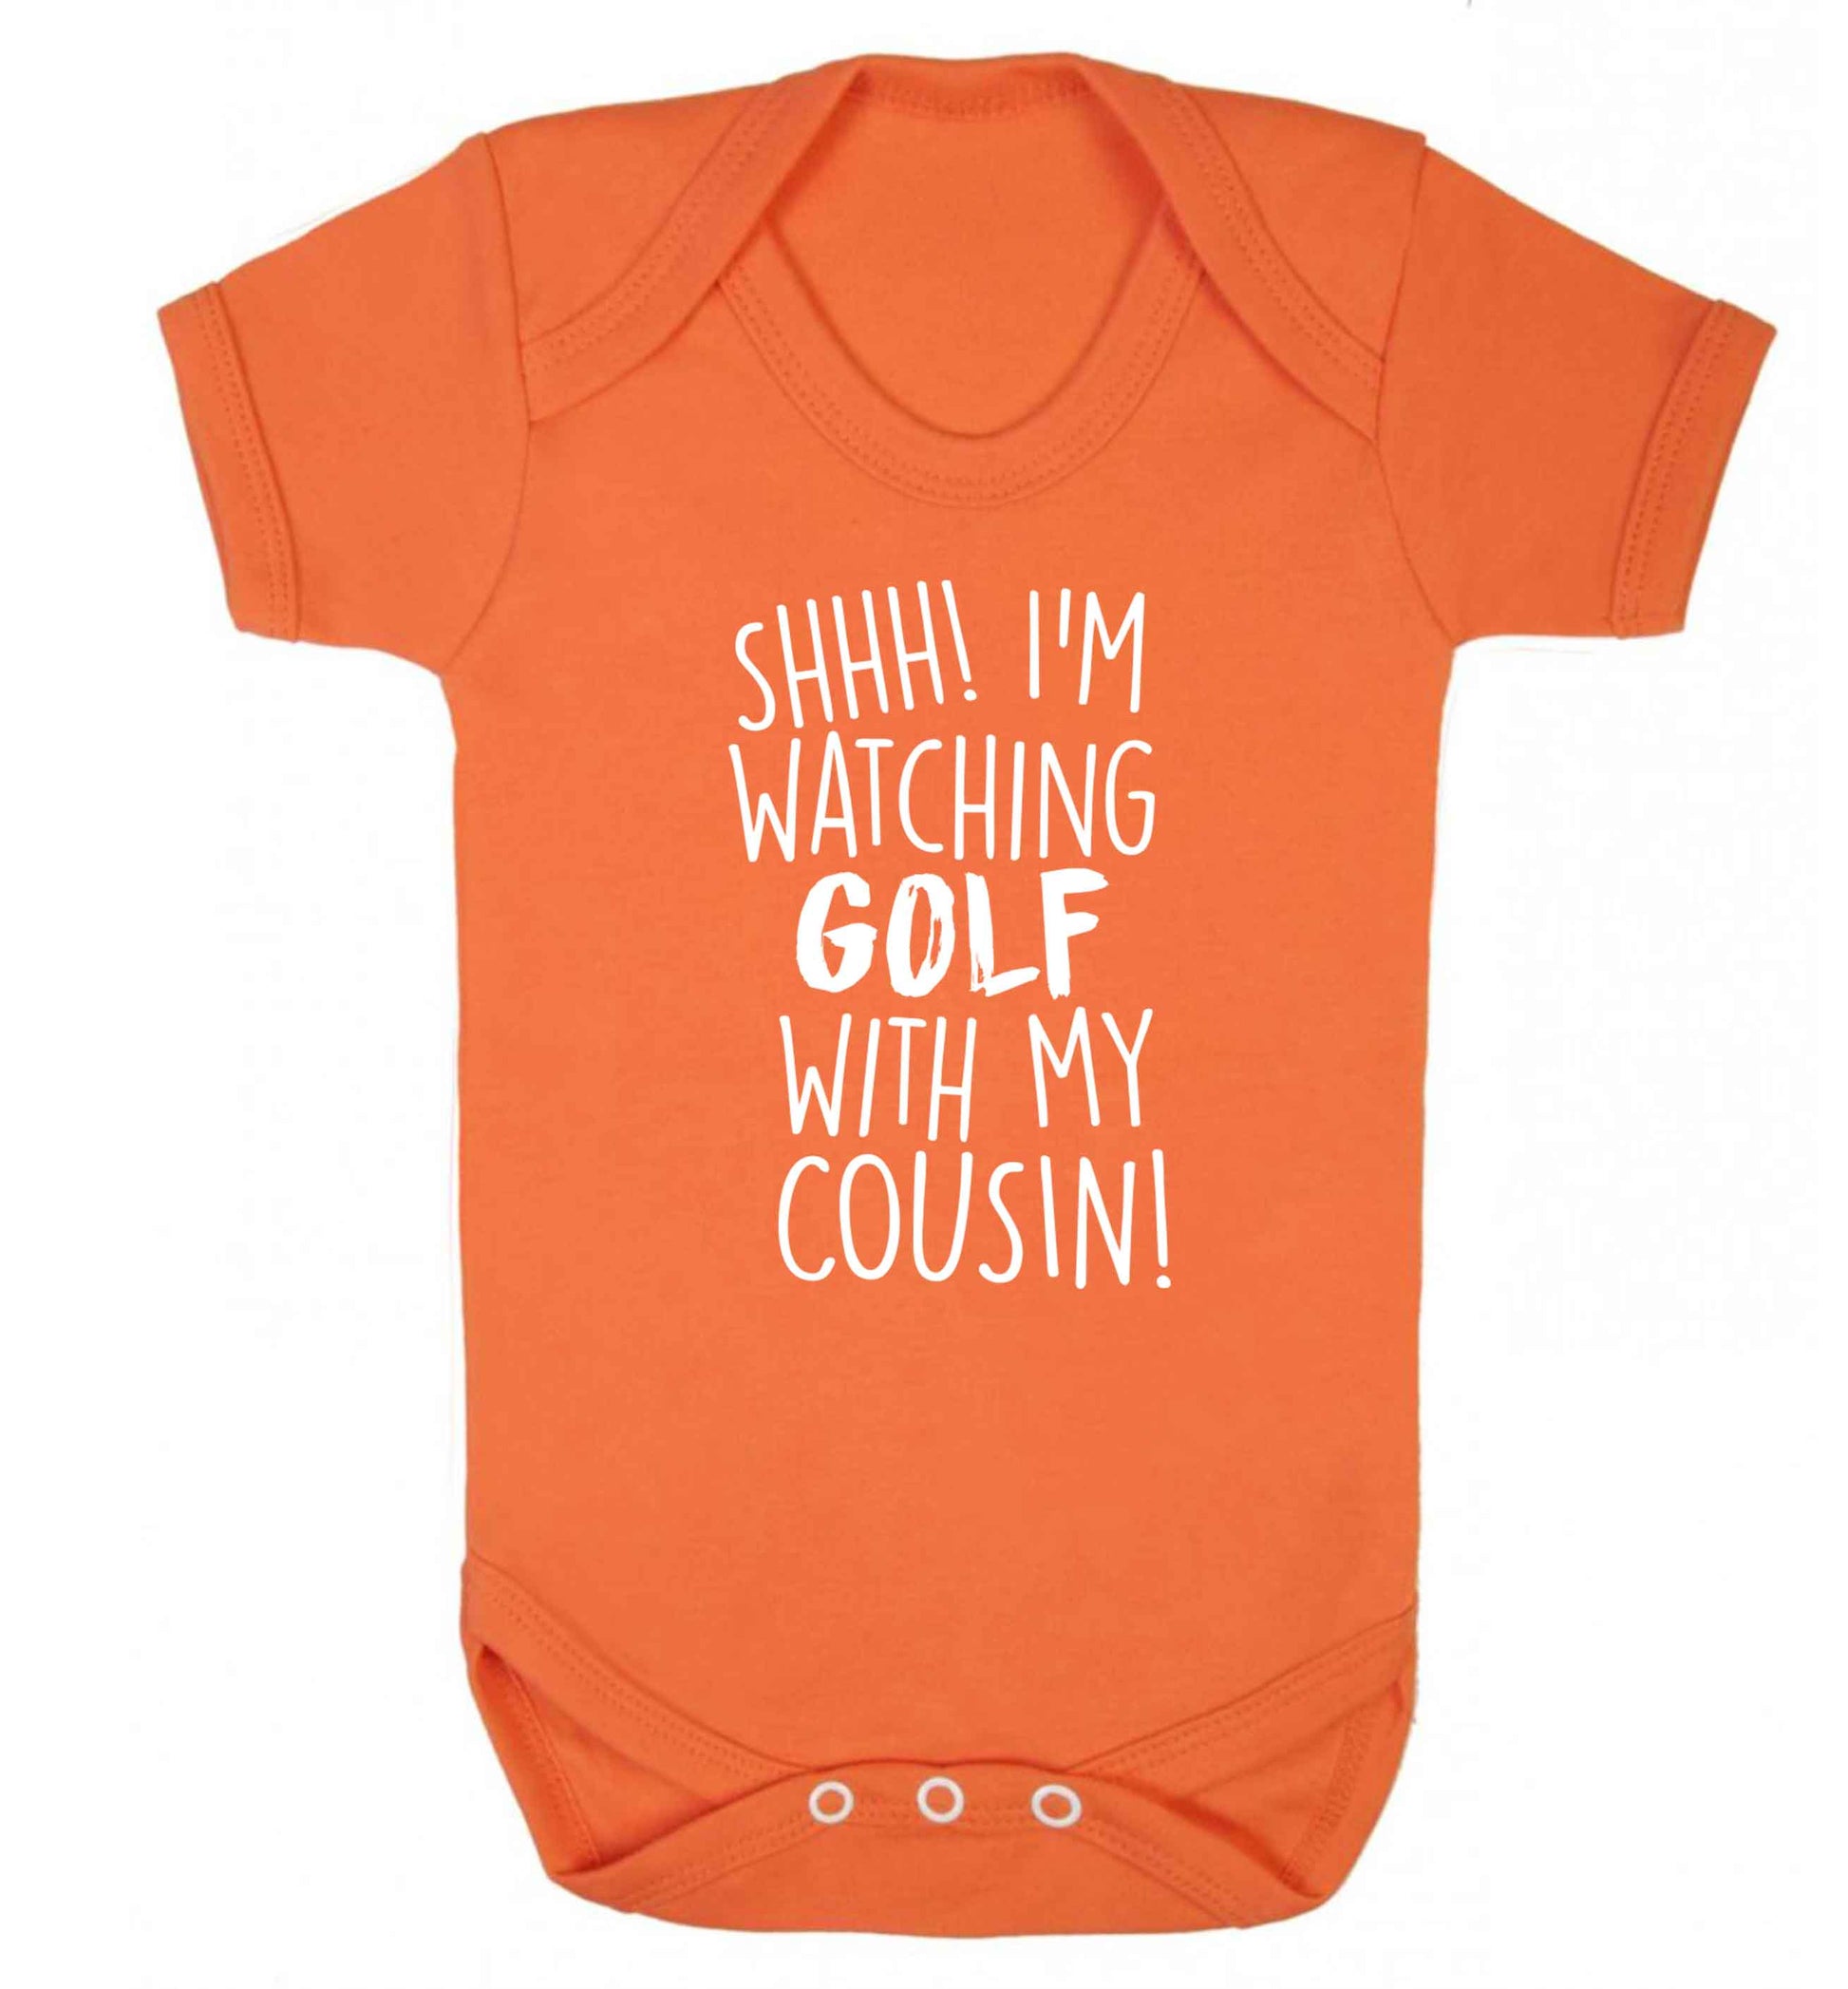 Shh I'm watching golf with my cousin Baby Vest orange 18-24 months